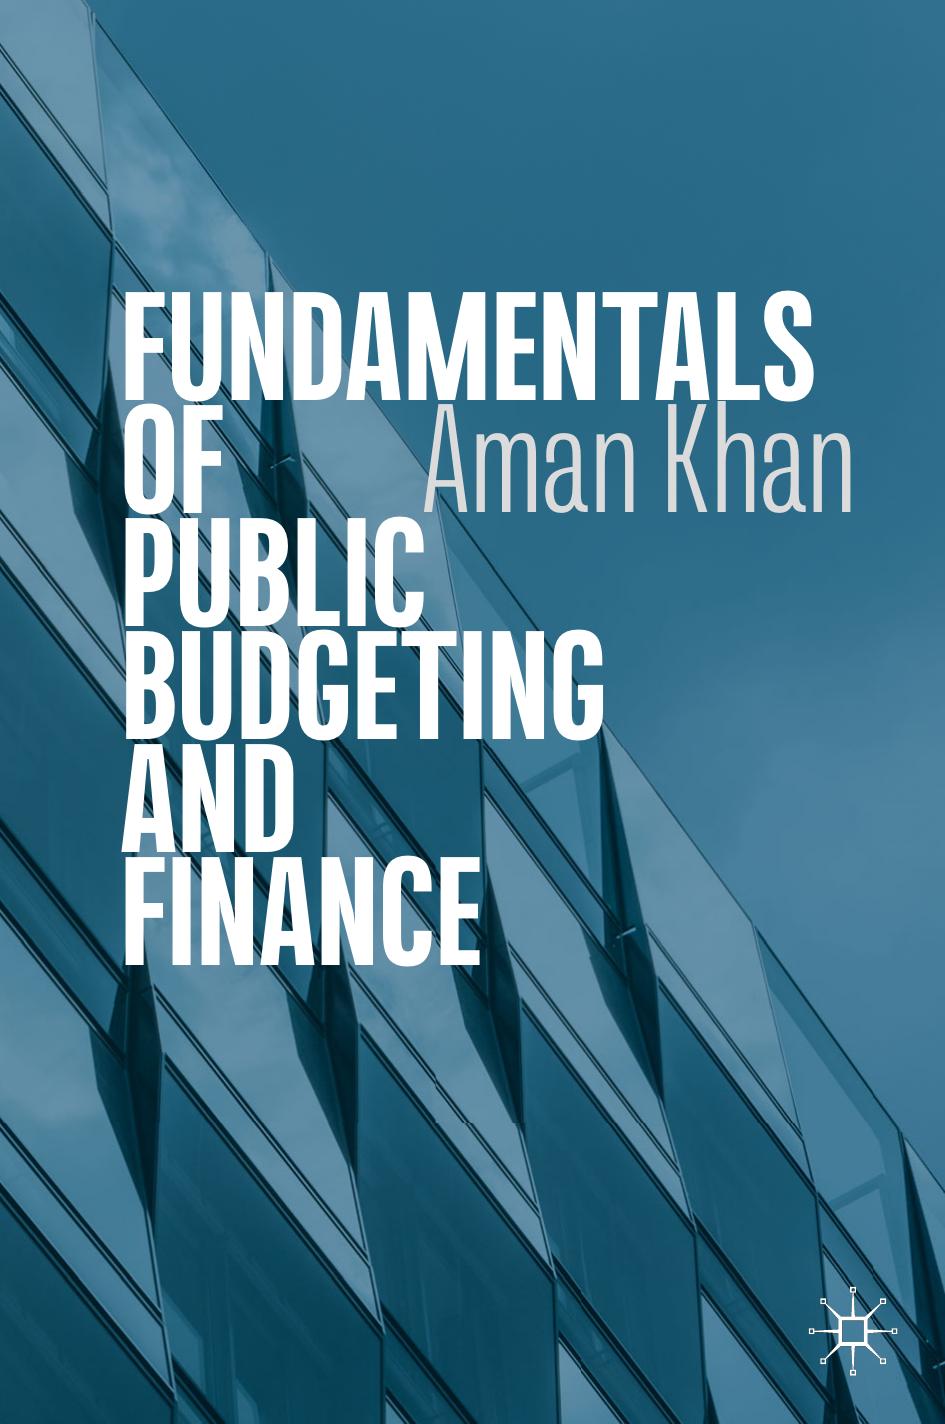 Fundamentals of Public Budgeting and Finance by Aman Khan (z-lib.org) 2019